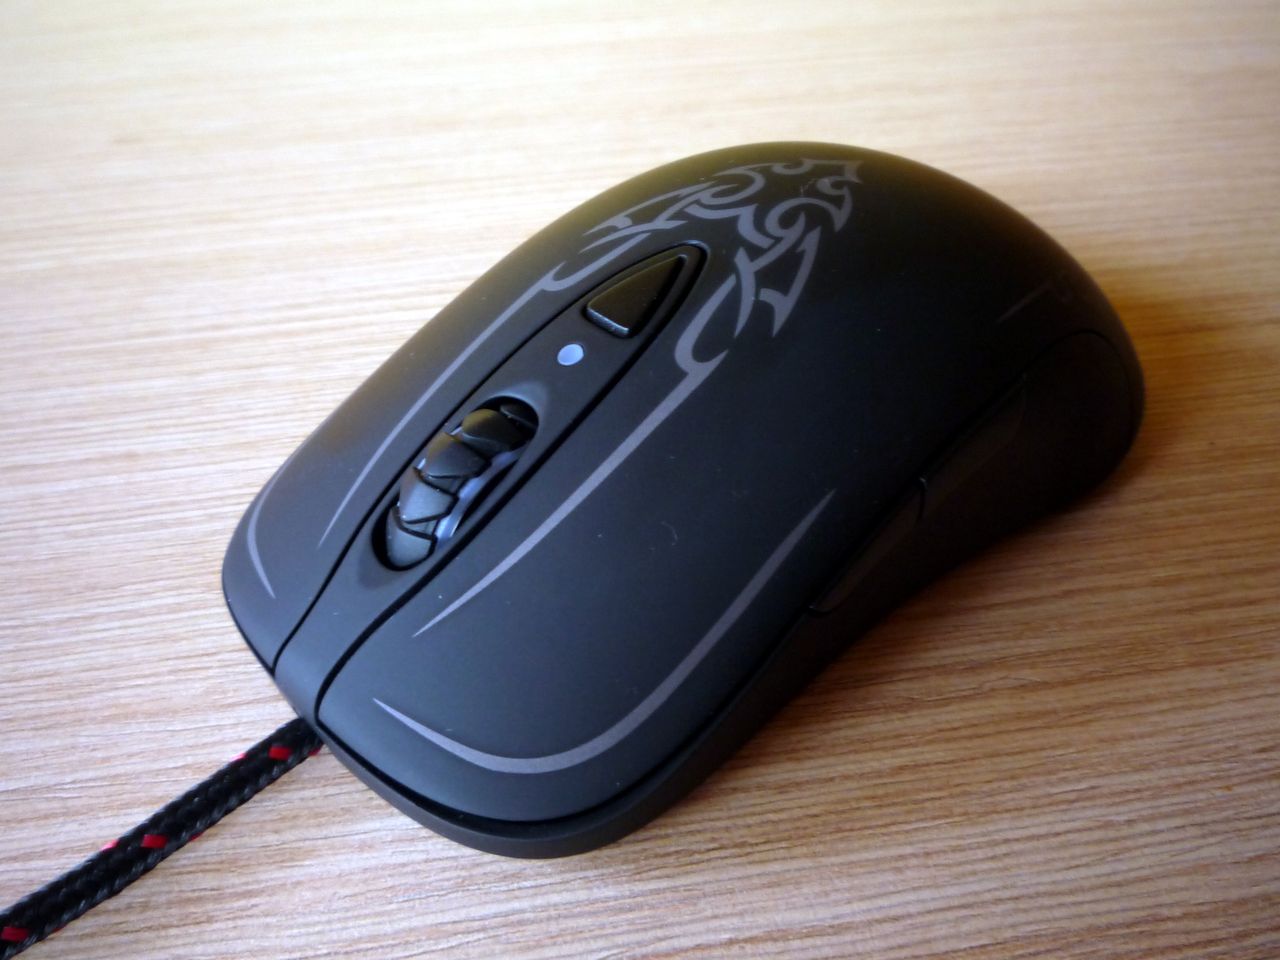 SteelSeries Diablo III mouse